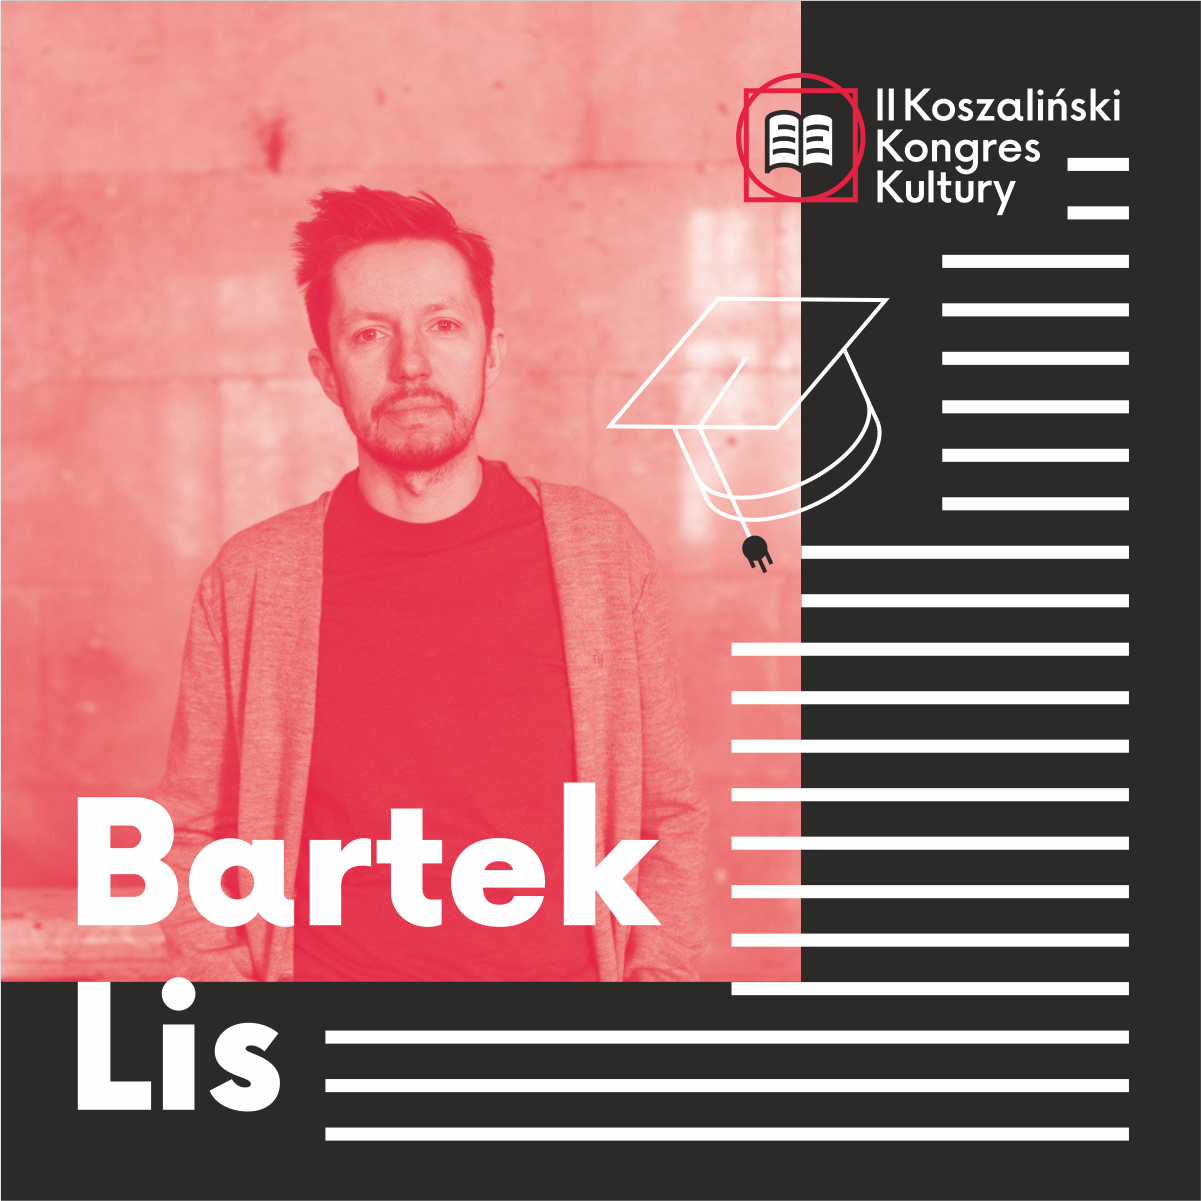 Bartek Lis